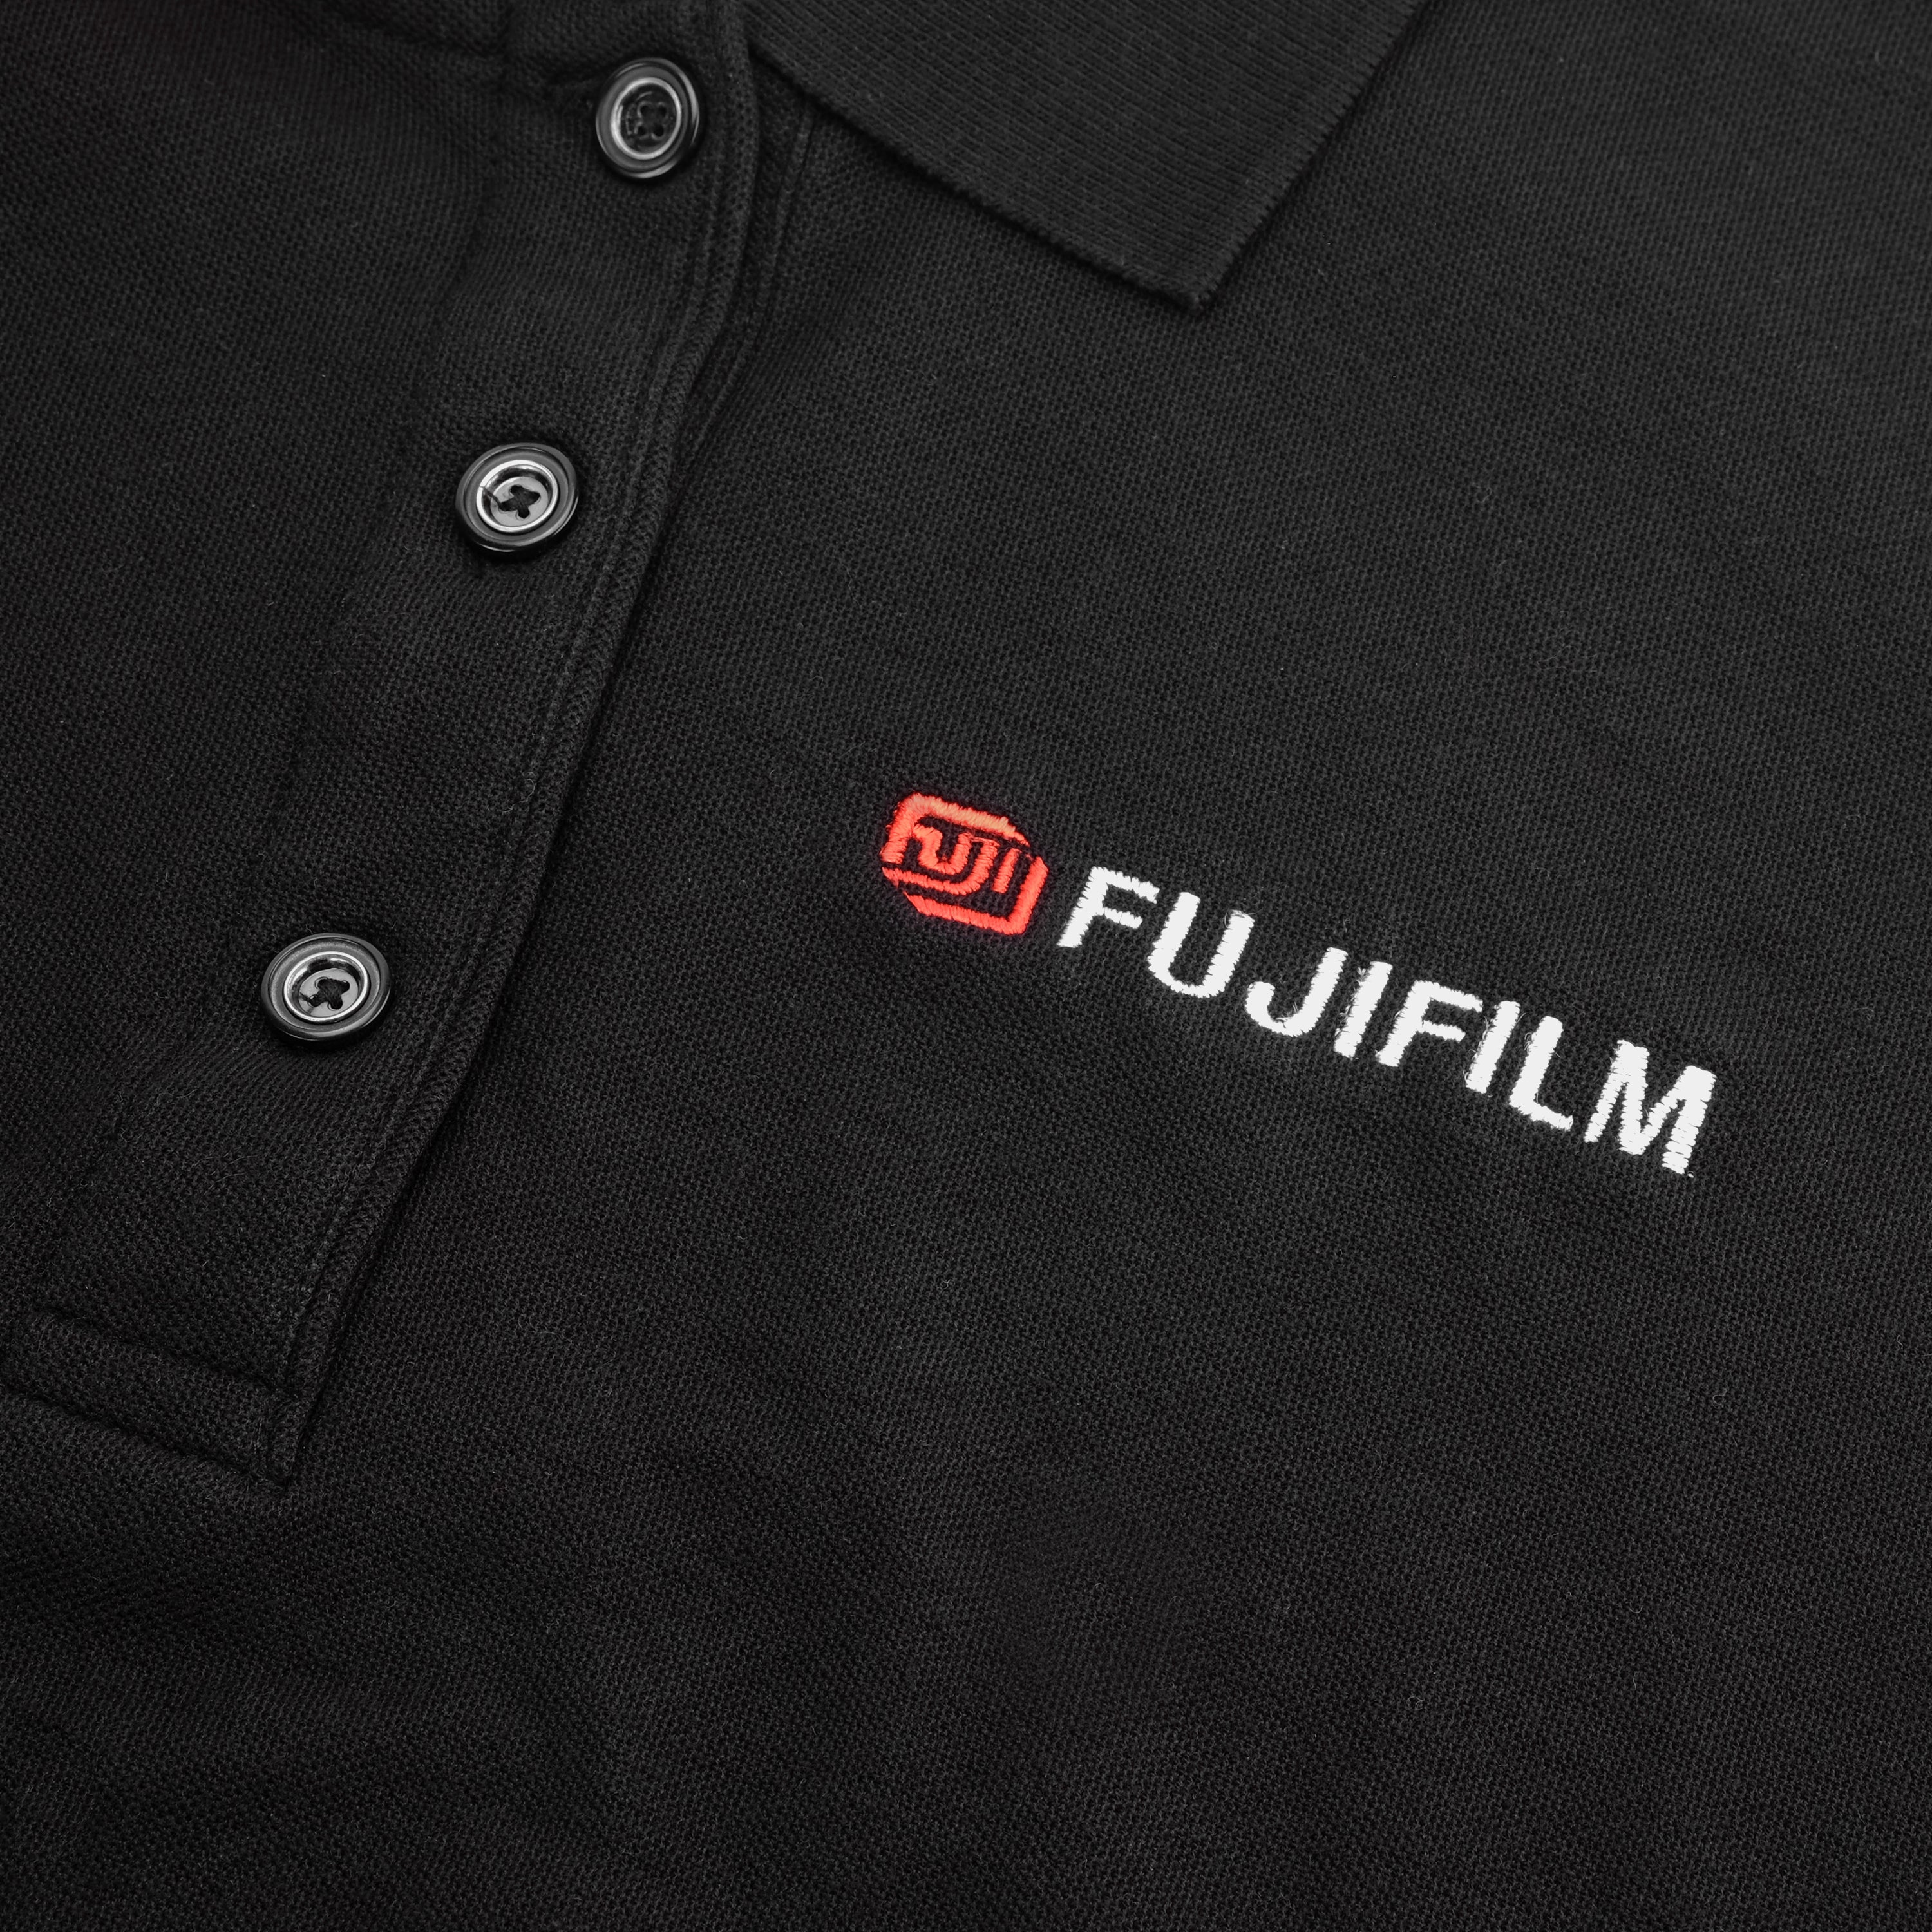 Vintage Black Fujifilm Polo Shirt - Women's Medium